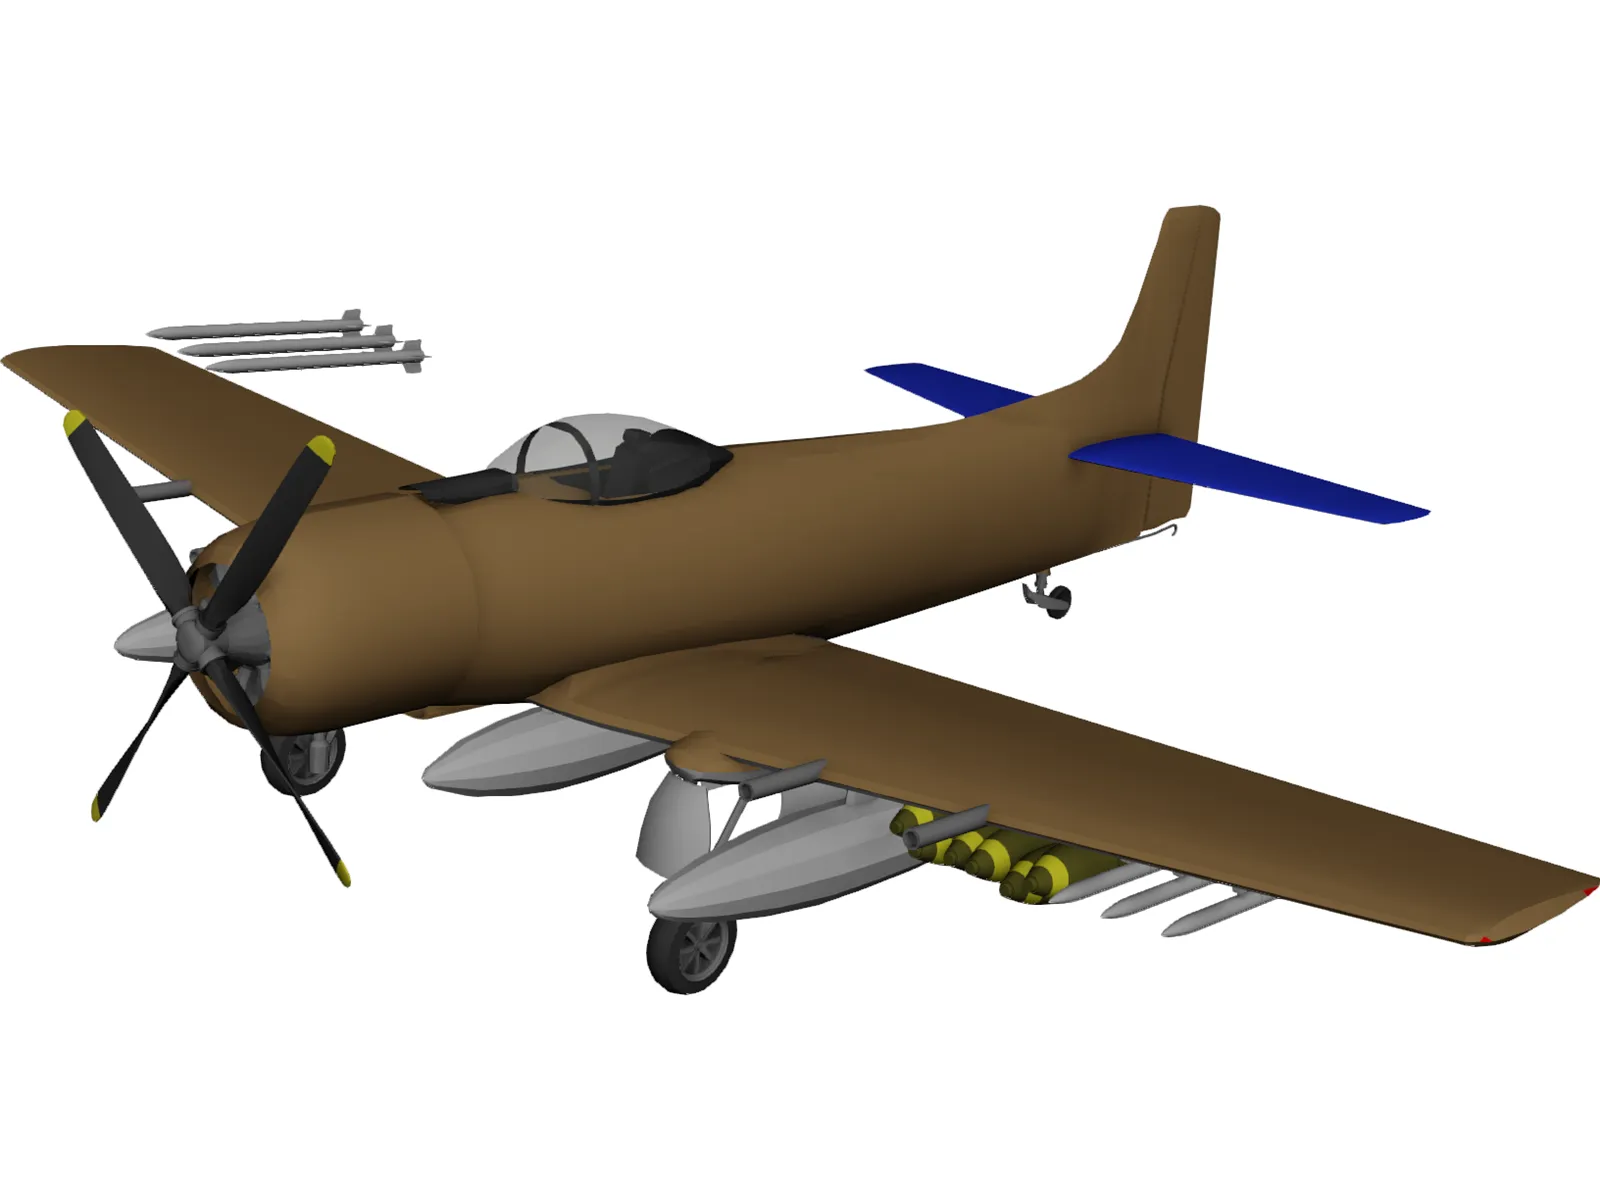 Douglas A-1 Skyraider 3D Model